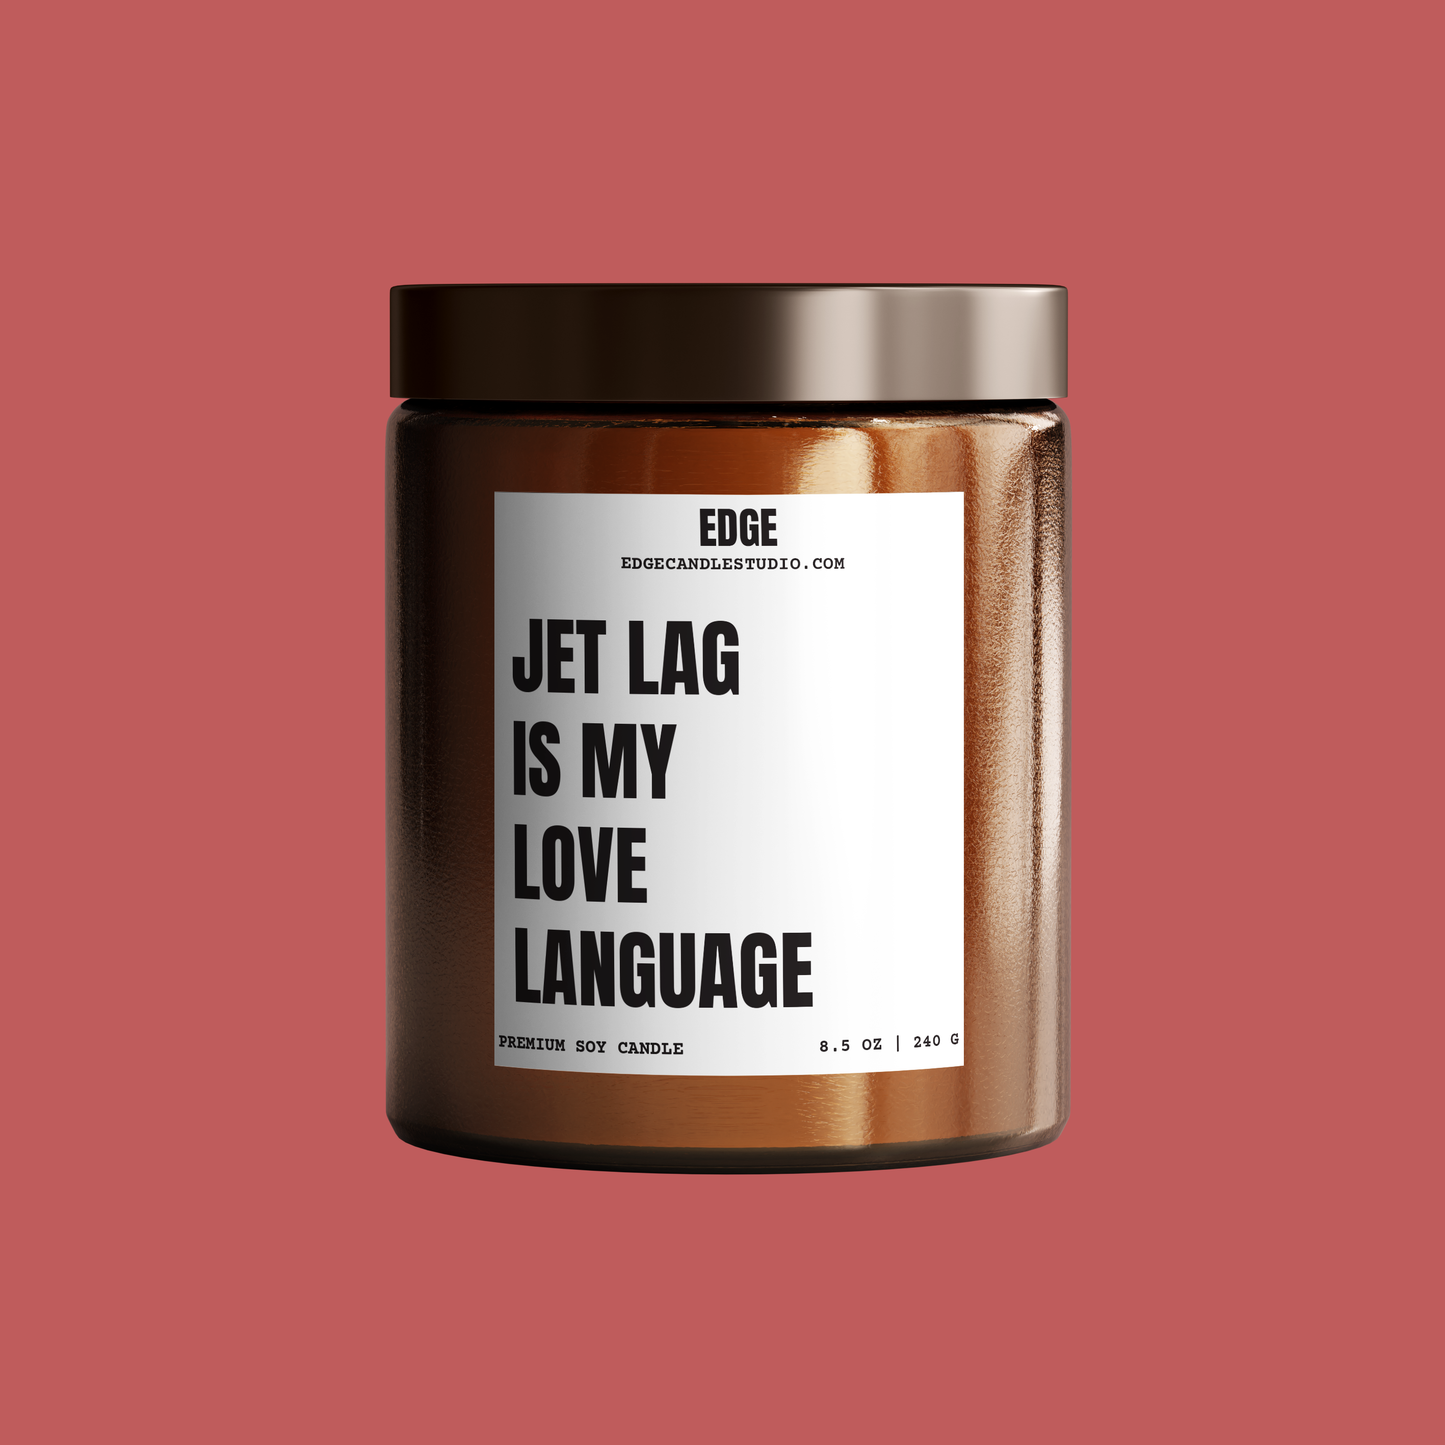 Jet lag is My Love Language